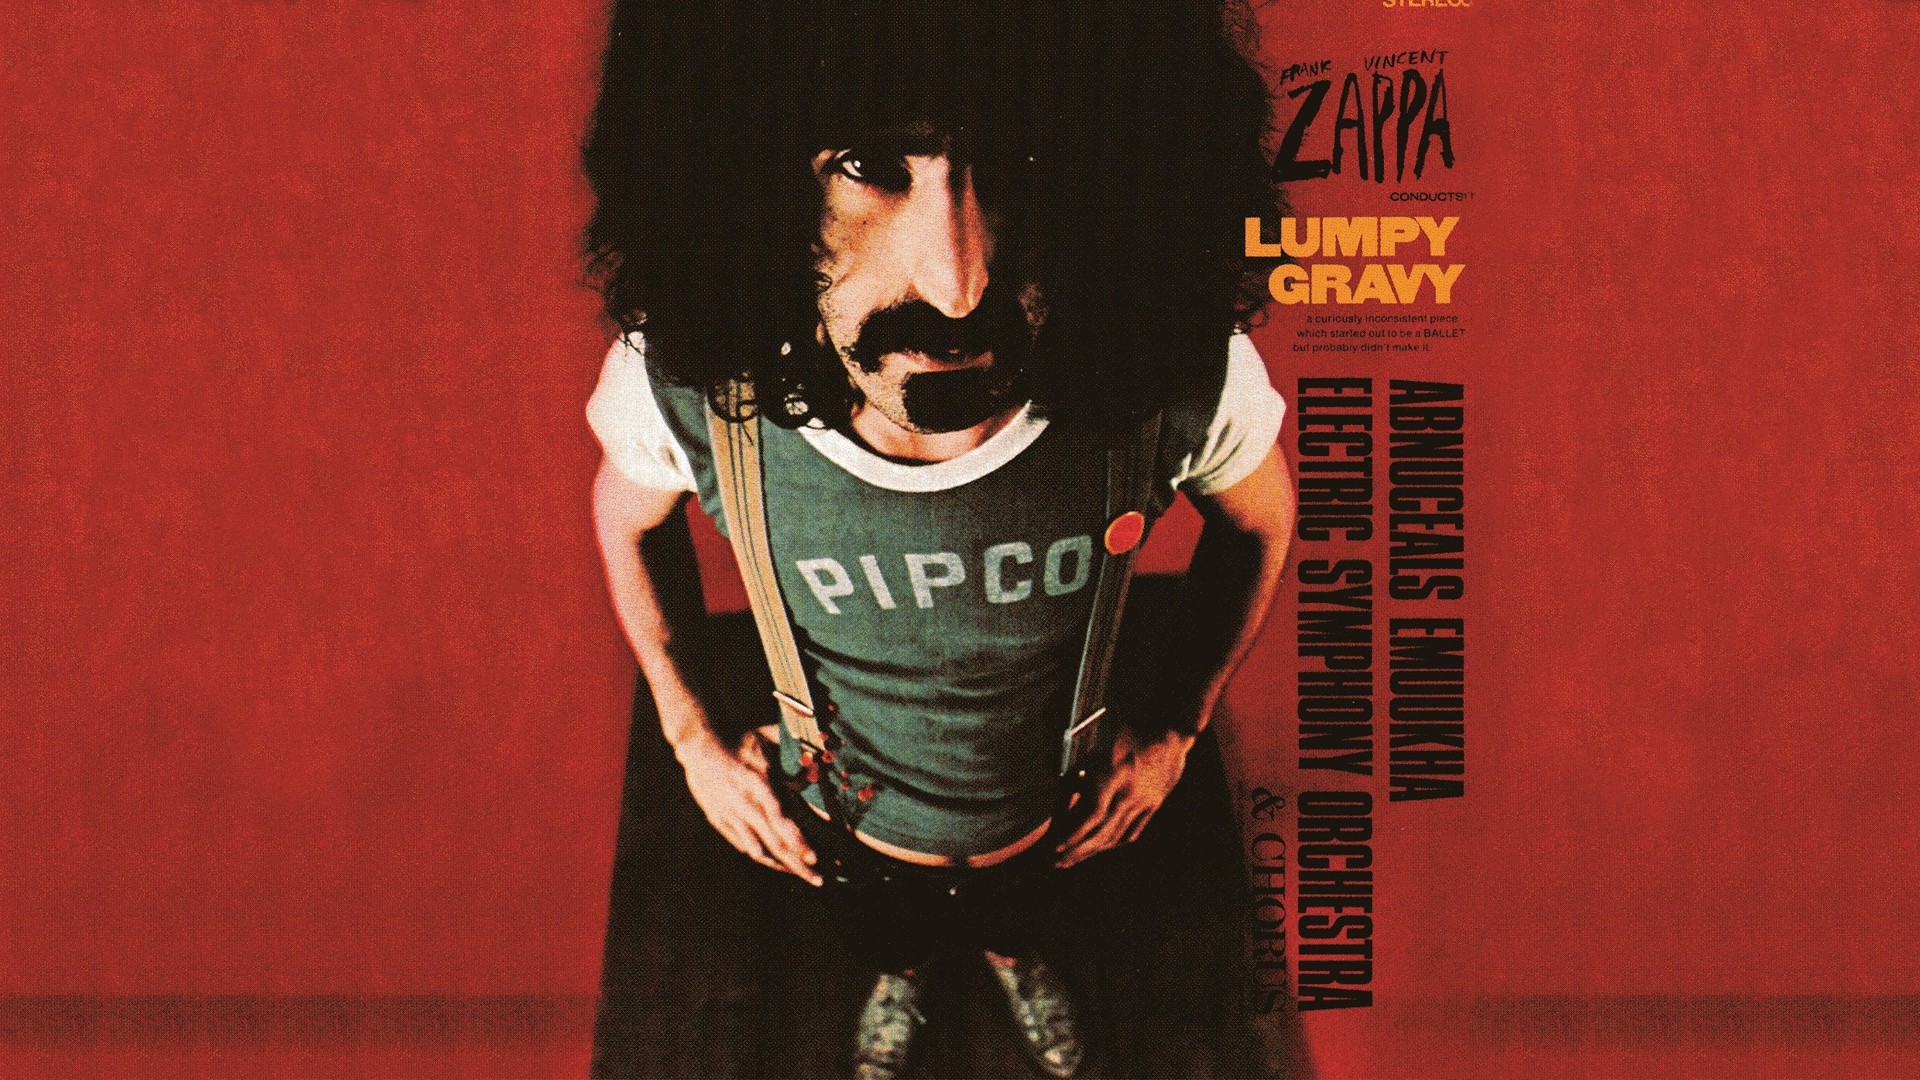 General 1920x1080 Frank Zappa men beard celebrity red background music legend musician